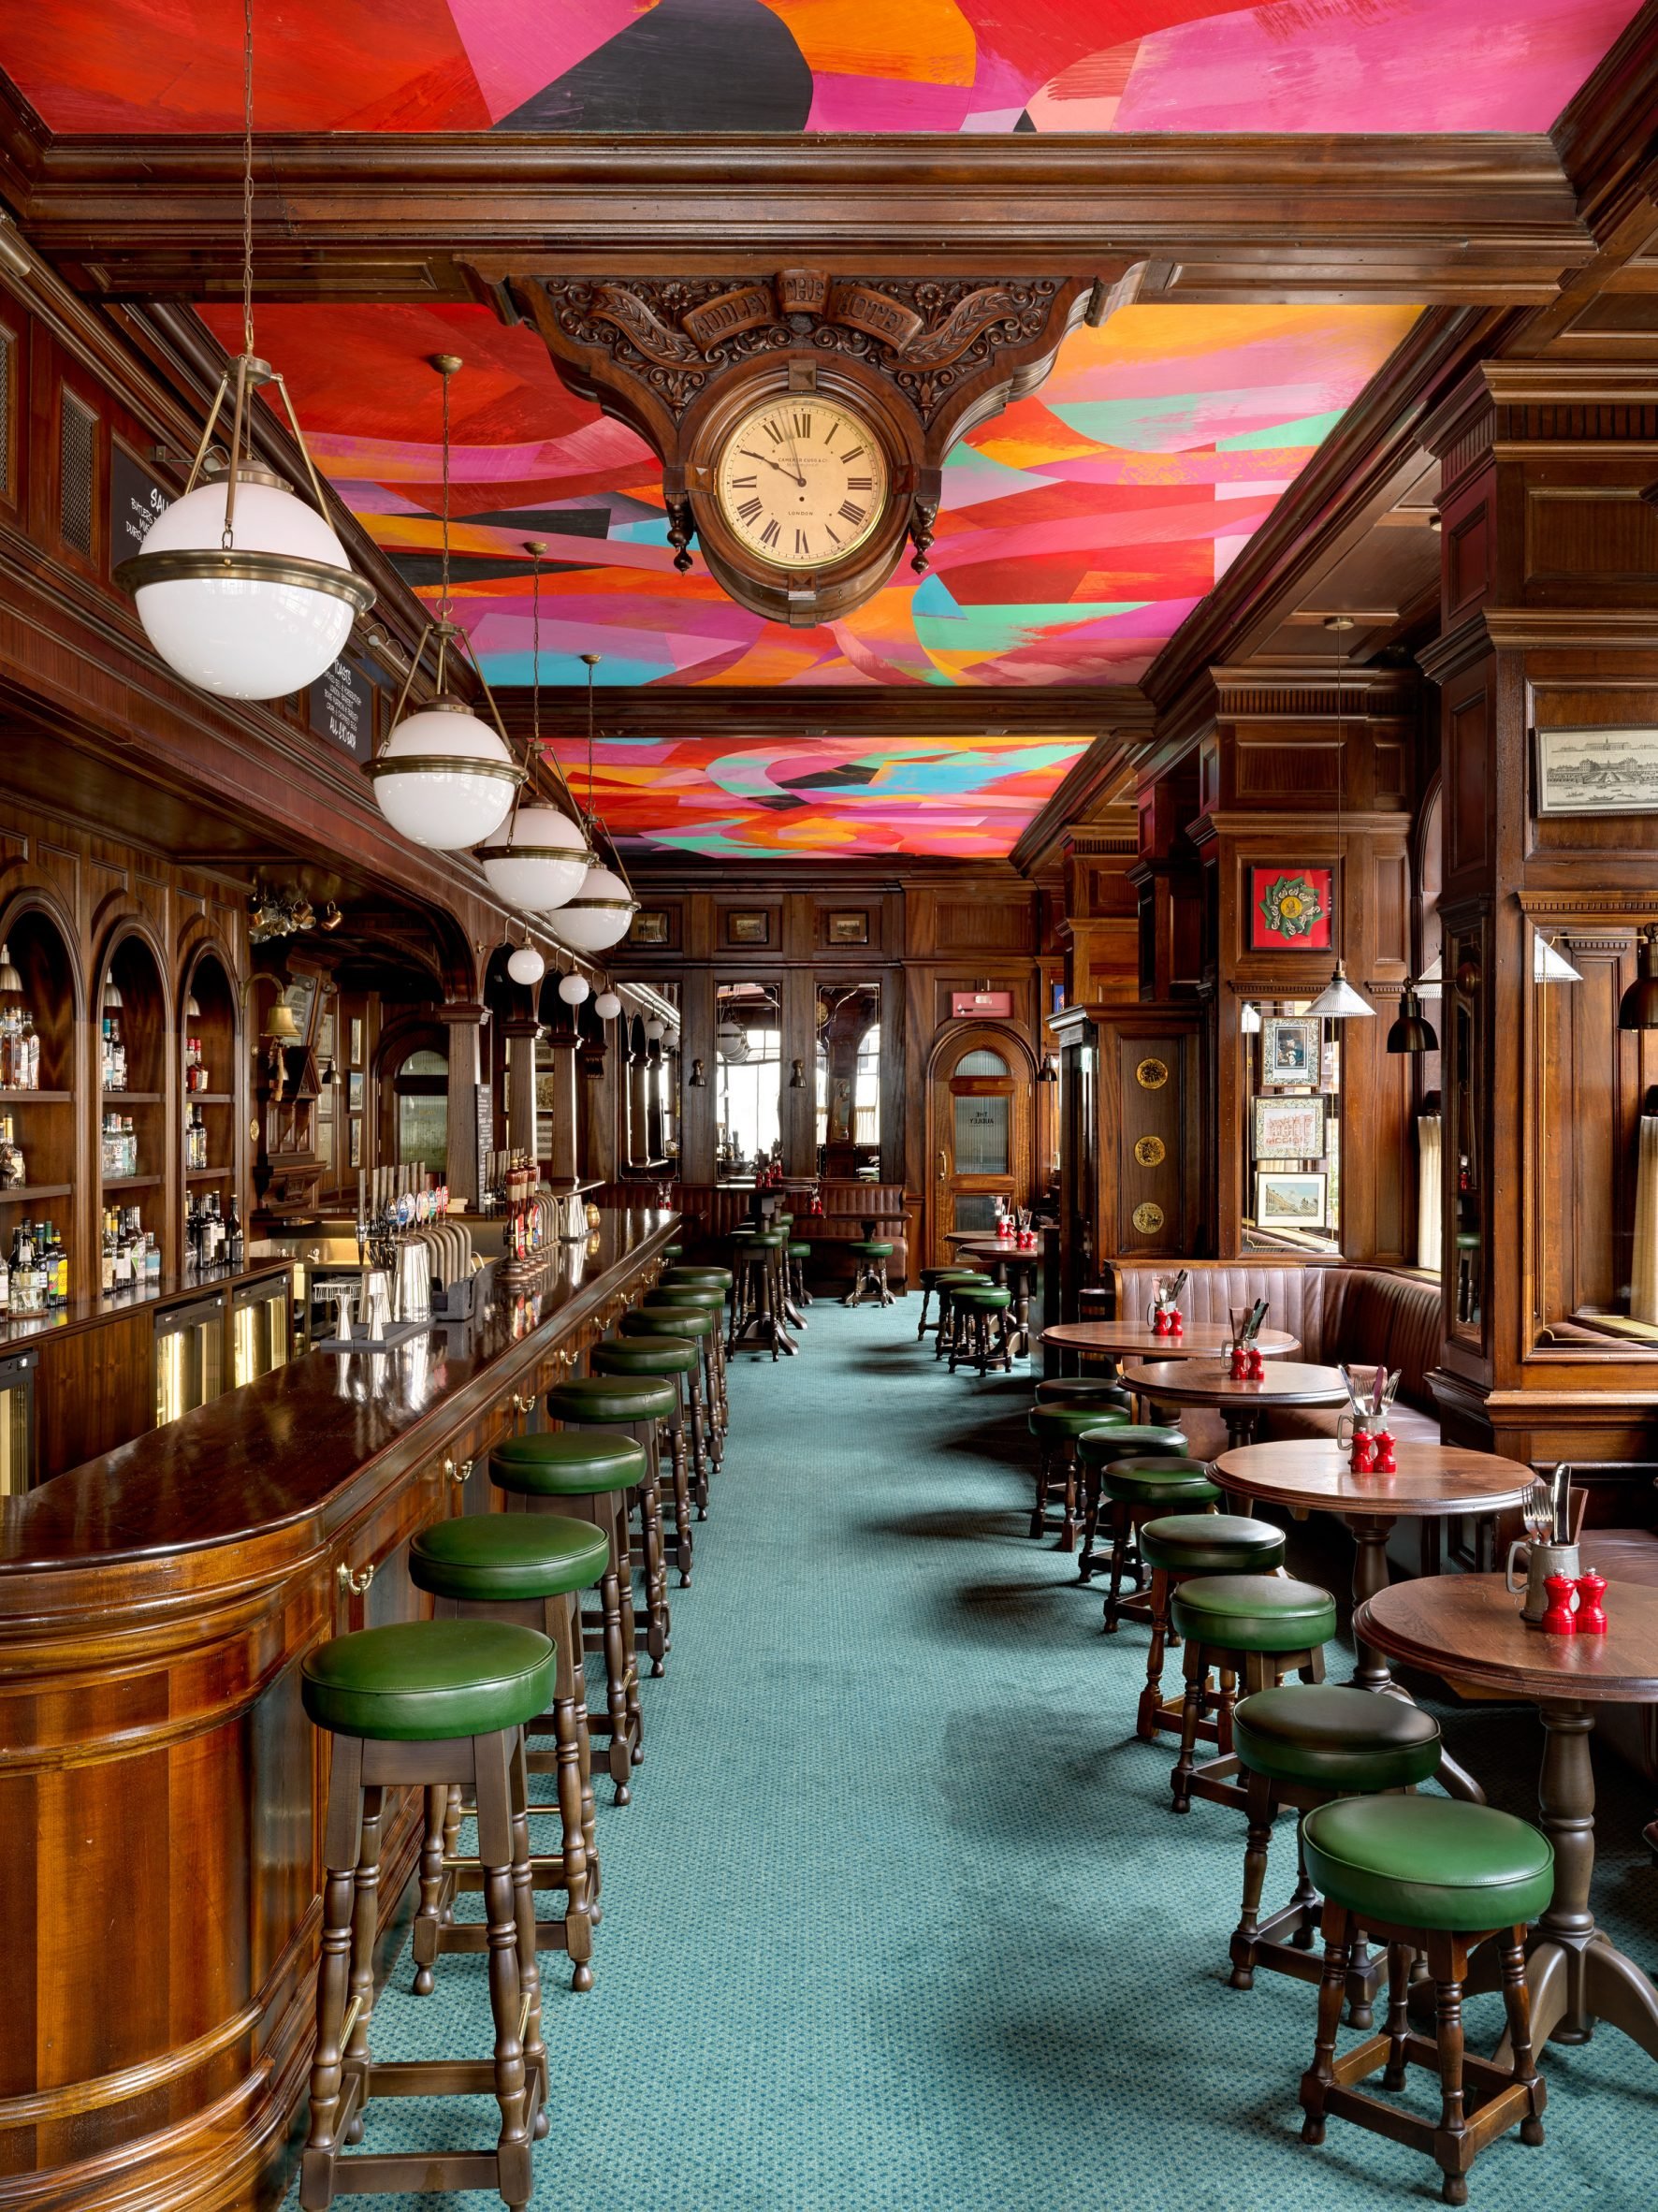 Audley Pub Restaurant Interiors London Mount Street Laplace Dezeen 2364 Col 0 Scaled 